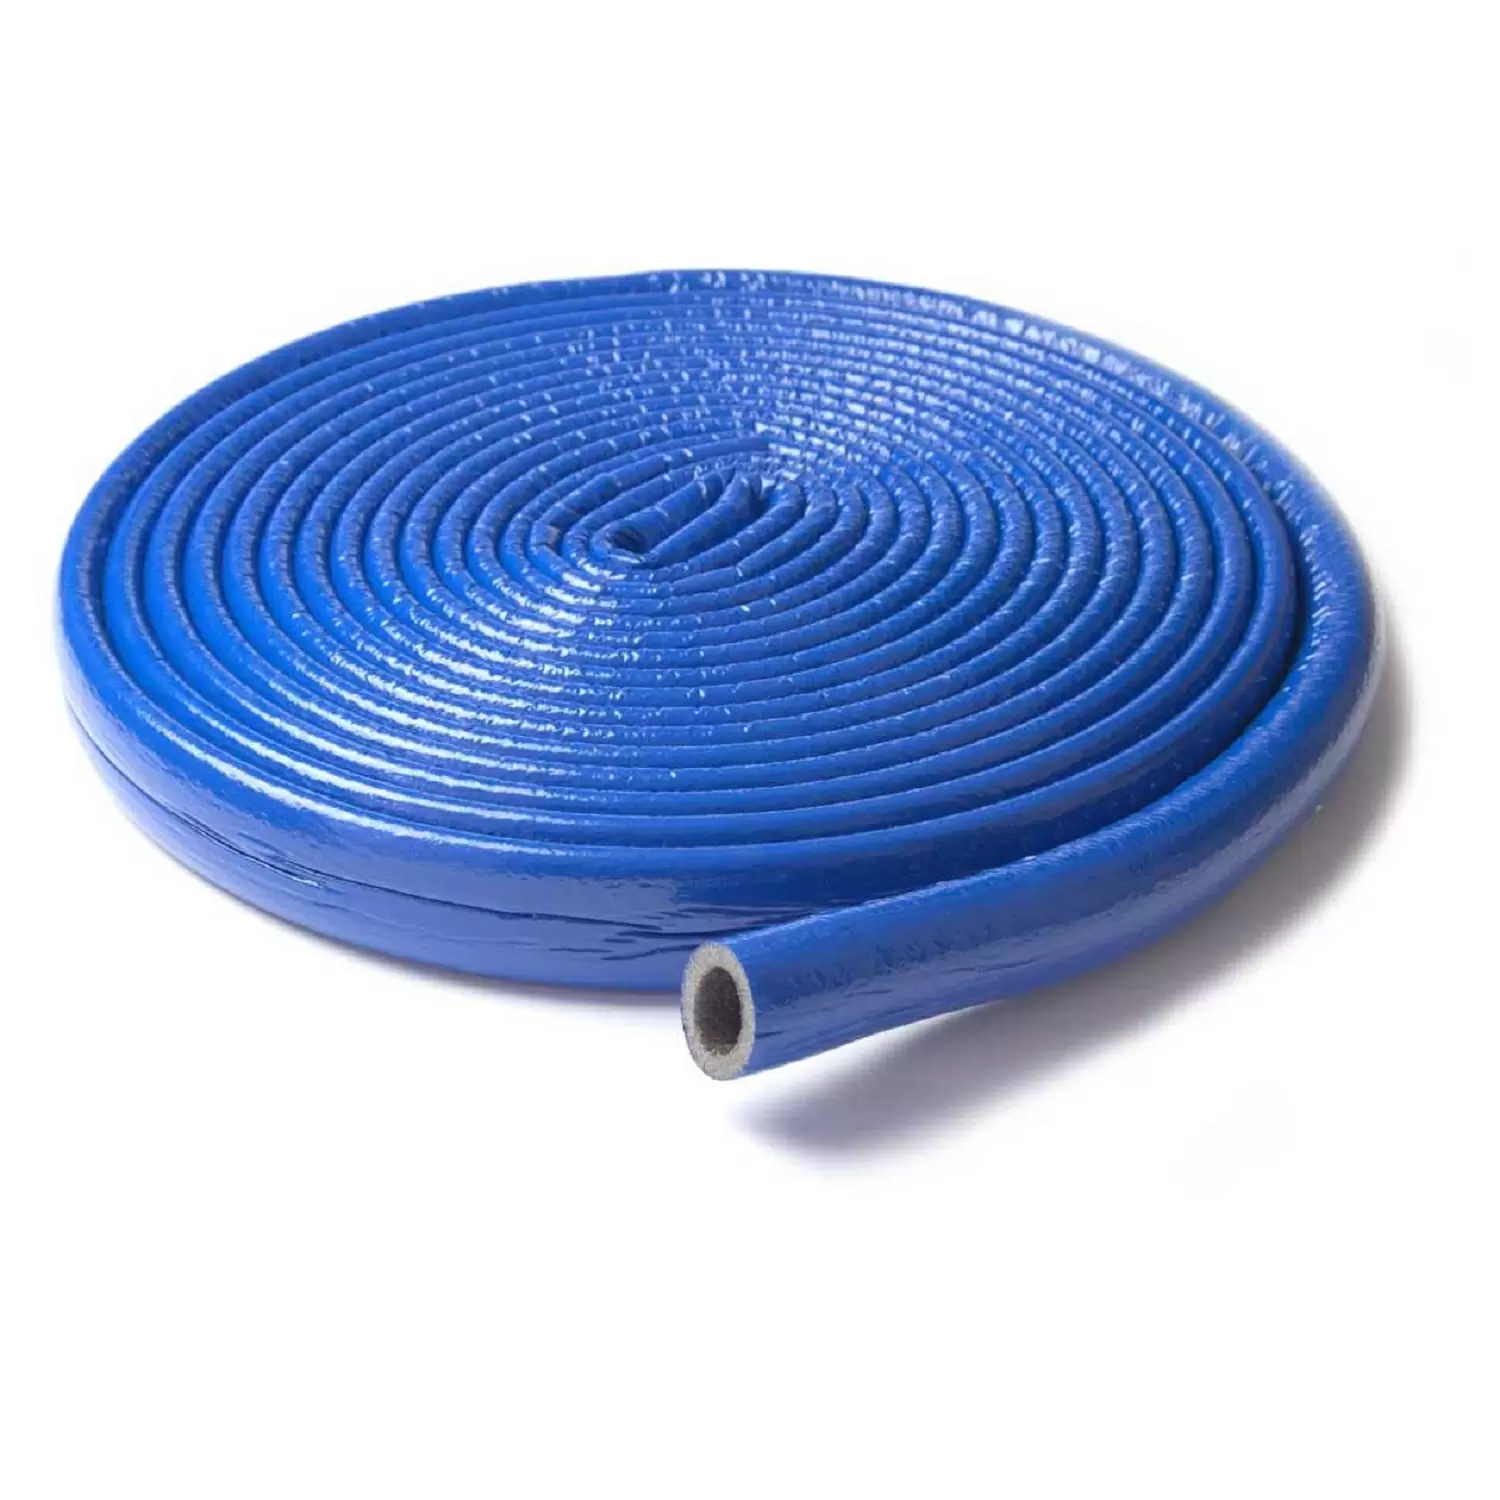 Теплоизоляция Энергофлекс супер протект 28/4 для труб диаметром 25 мм синяя, бухта 11 м